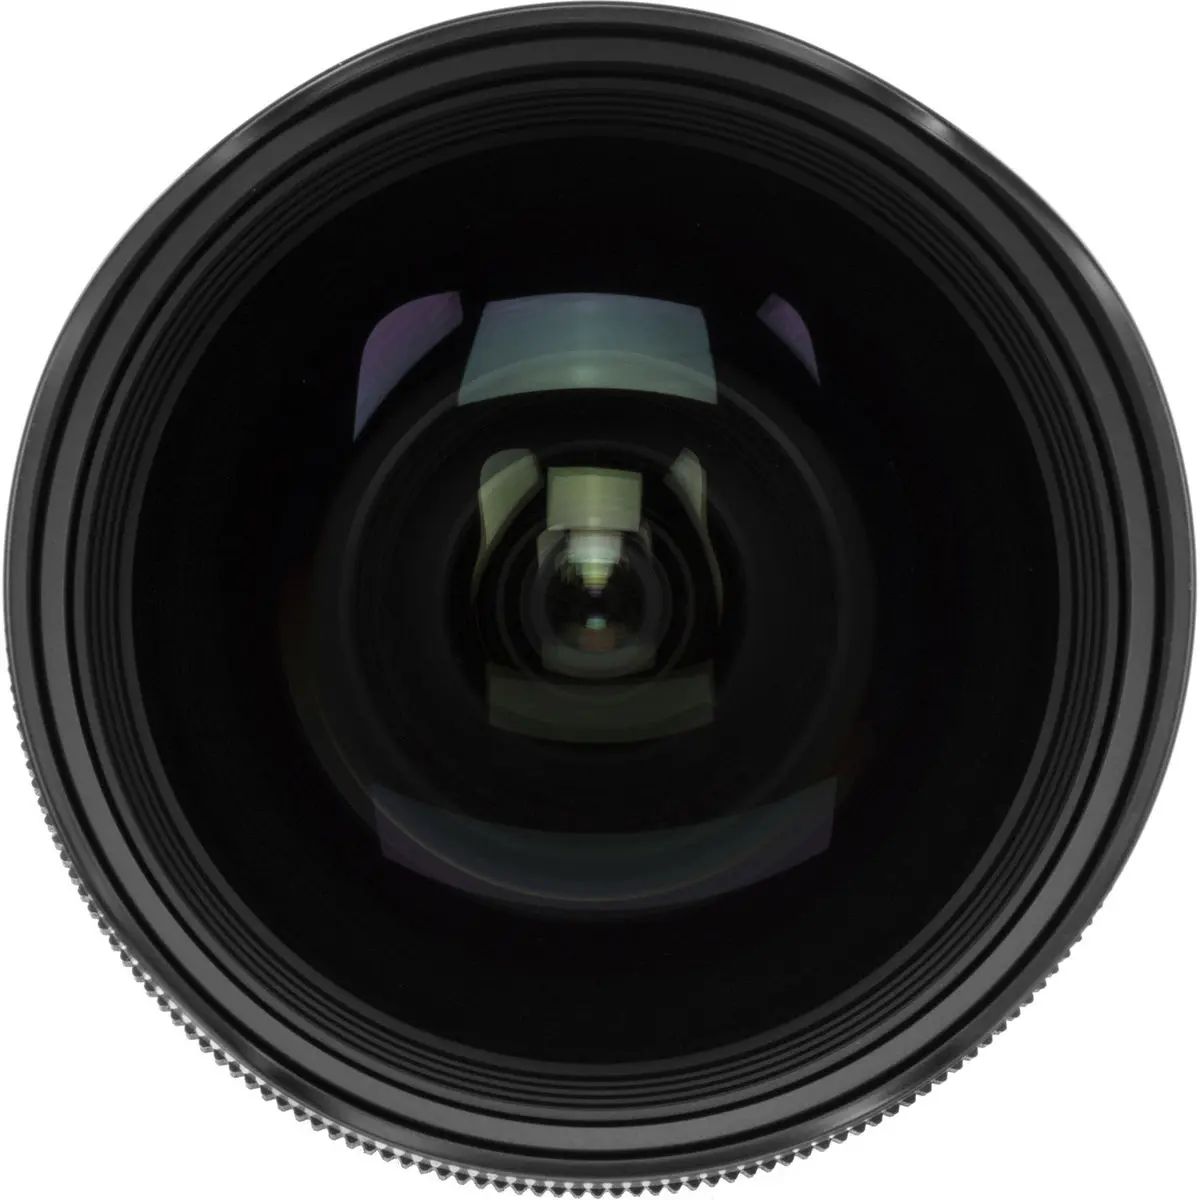 5. Sigma 14-24mm F2.8 DG HSM | Art (Nikon) Lens